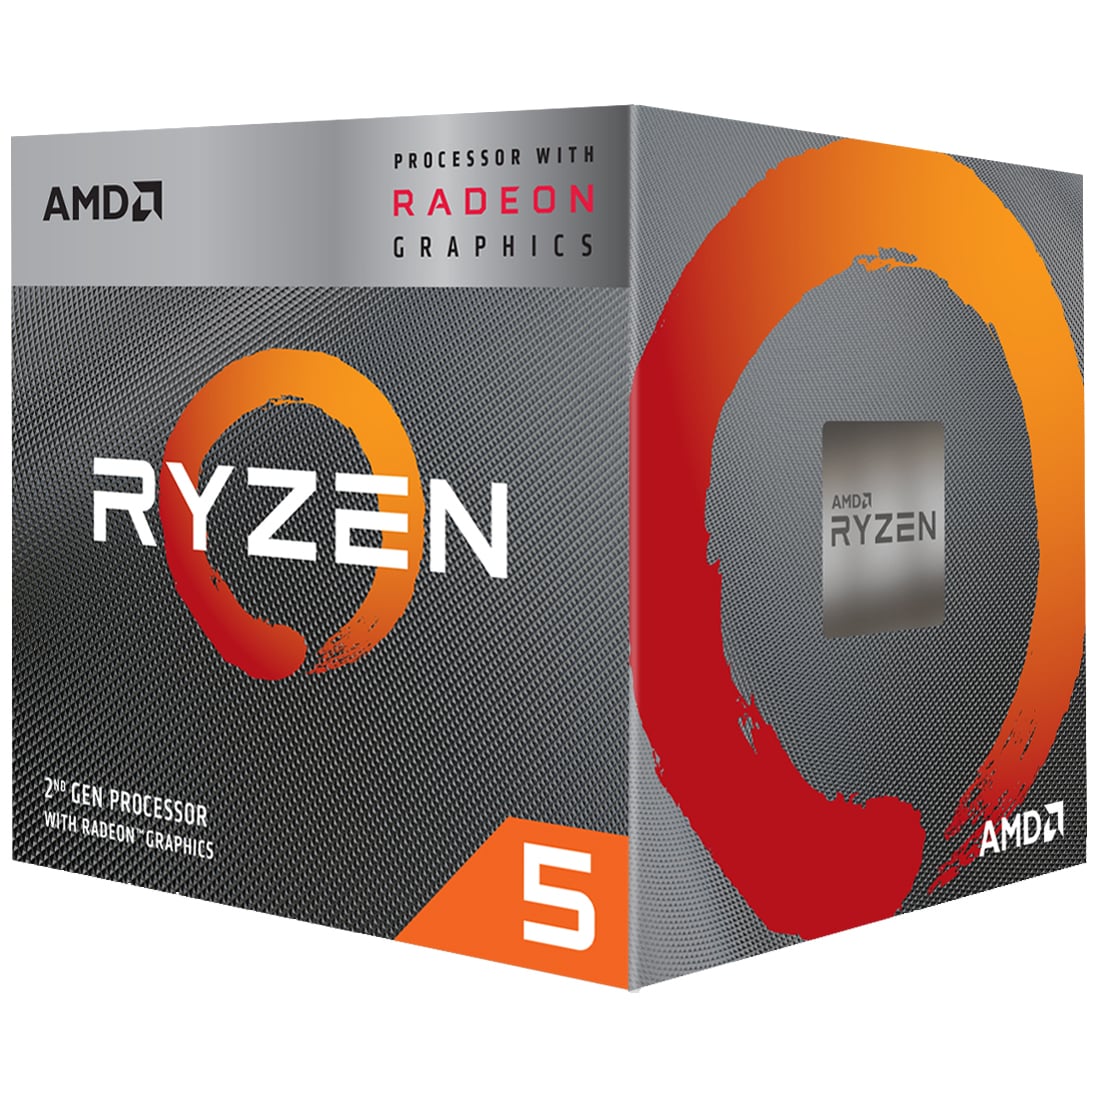 AMD Ryzen™ 5 3400G APU prosessori RX Vega 11 grafiikalla (box) - Gigantti  verkkokauppa